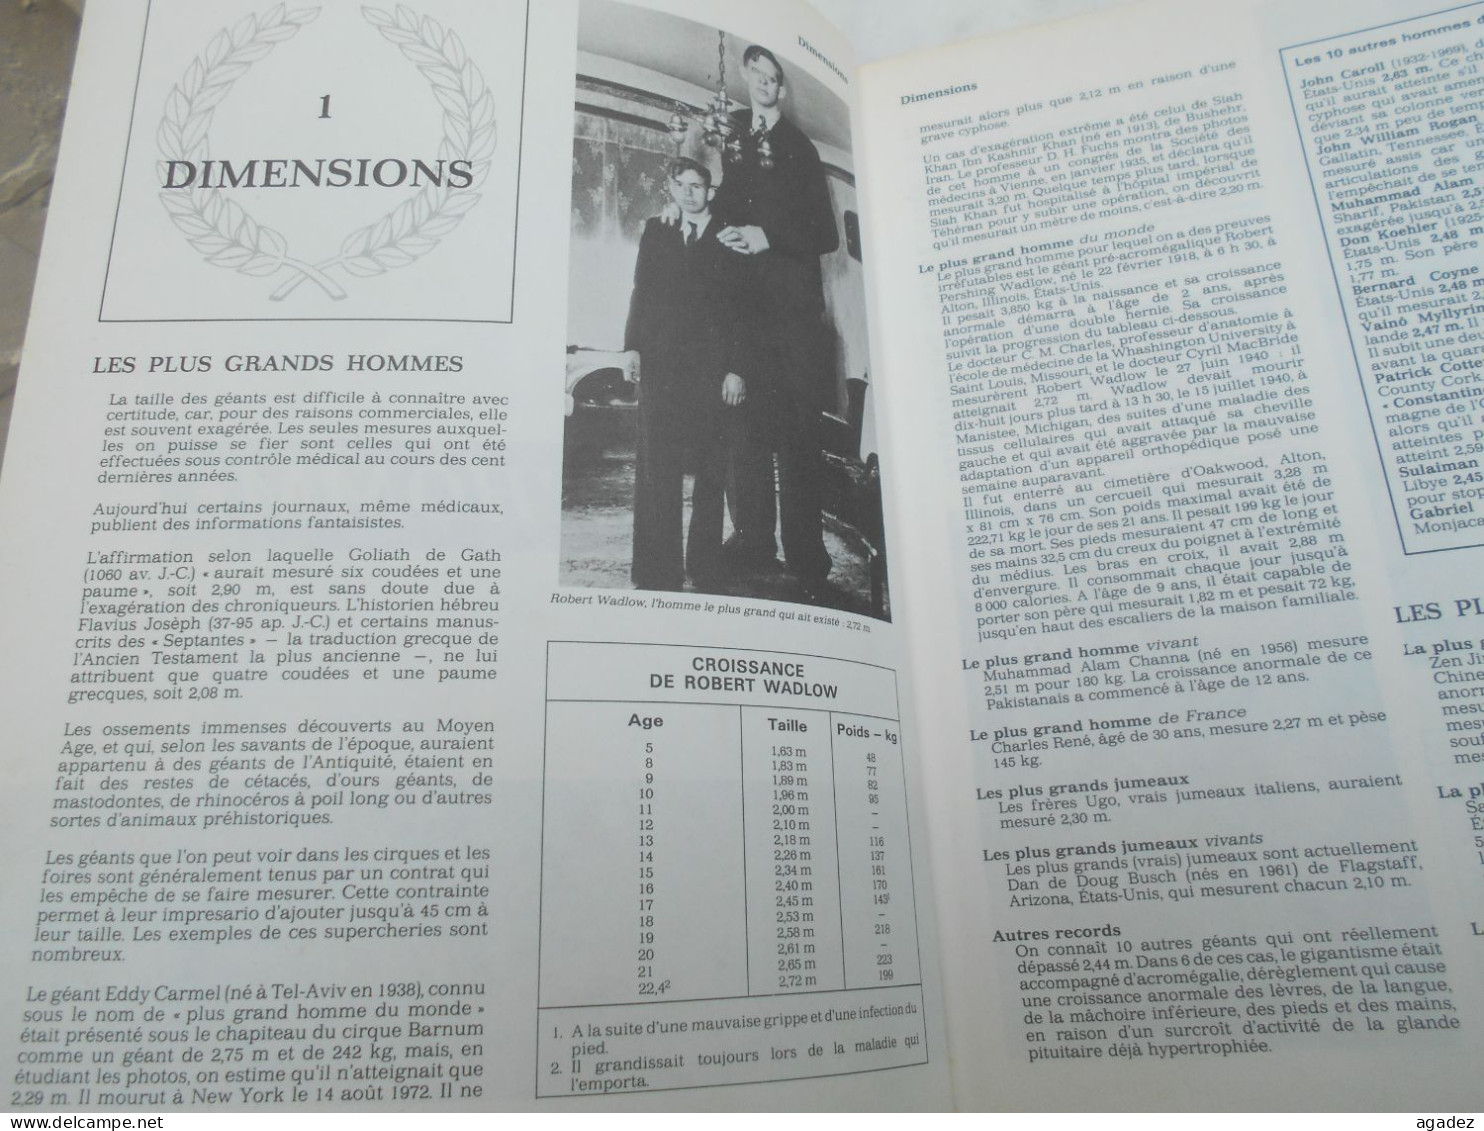 Livre Guinness Des Records 1983 - Encyclopedieën